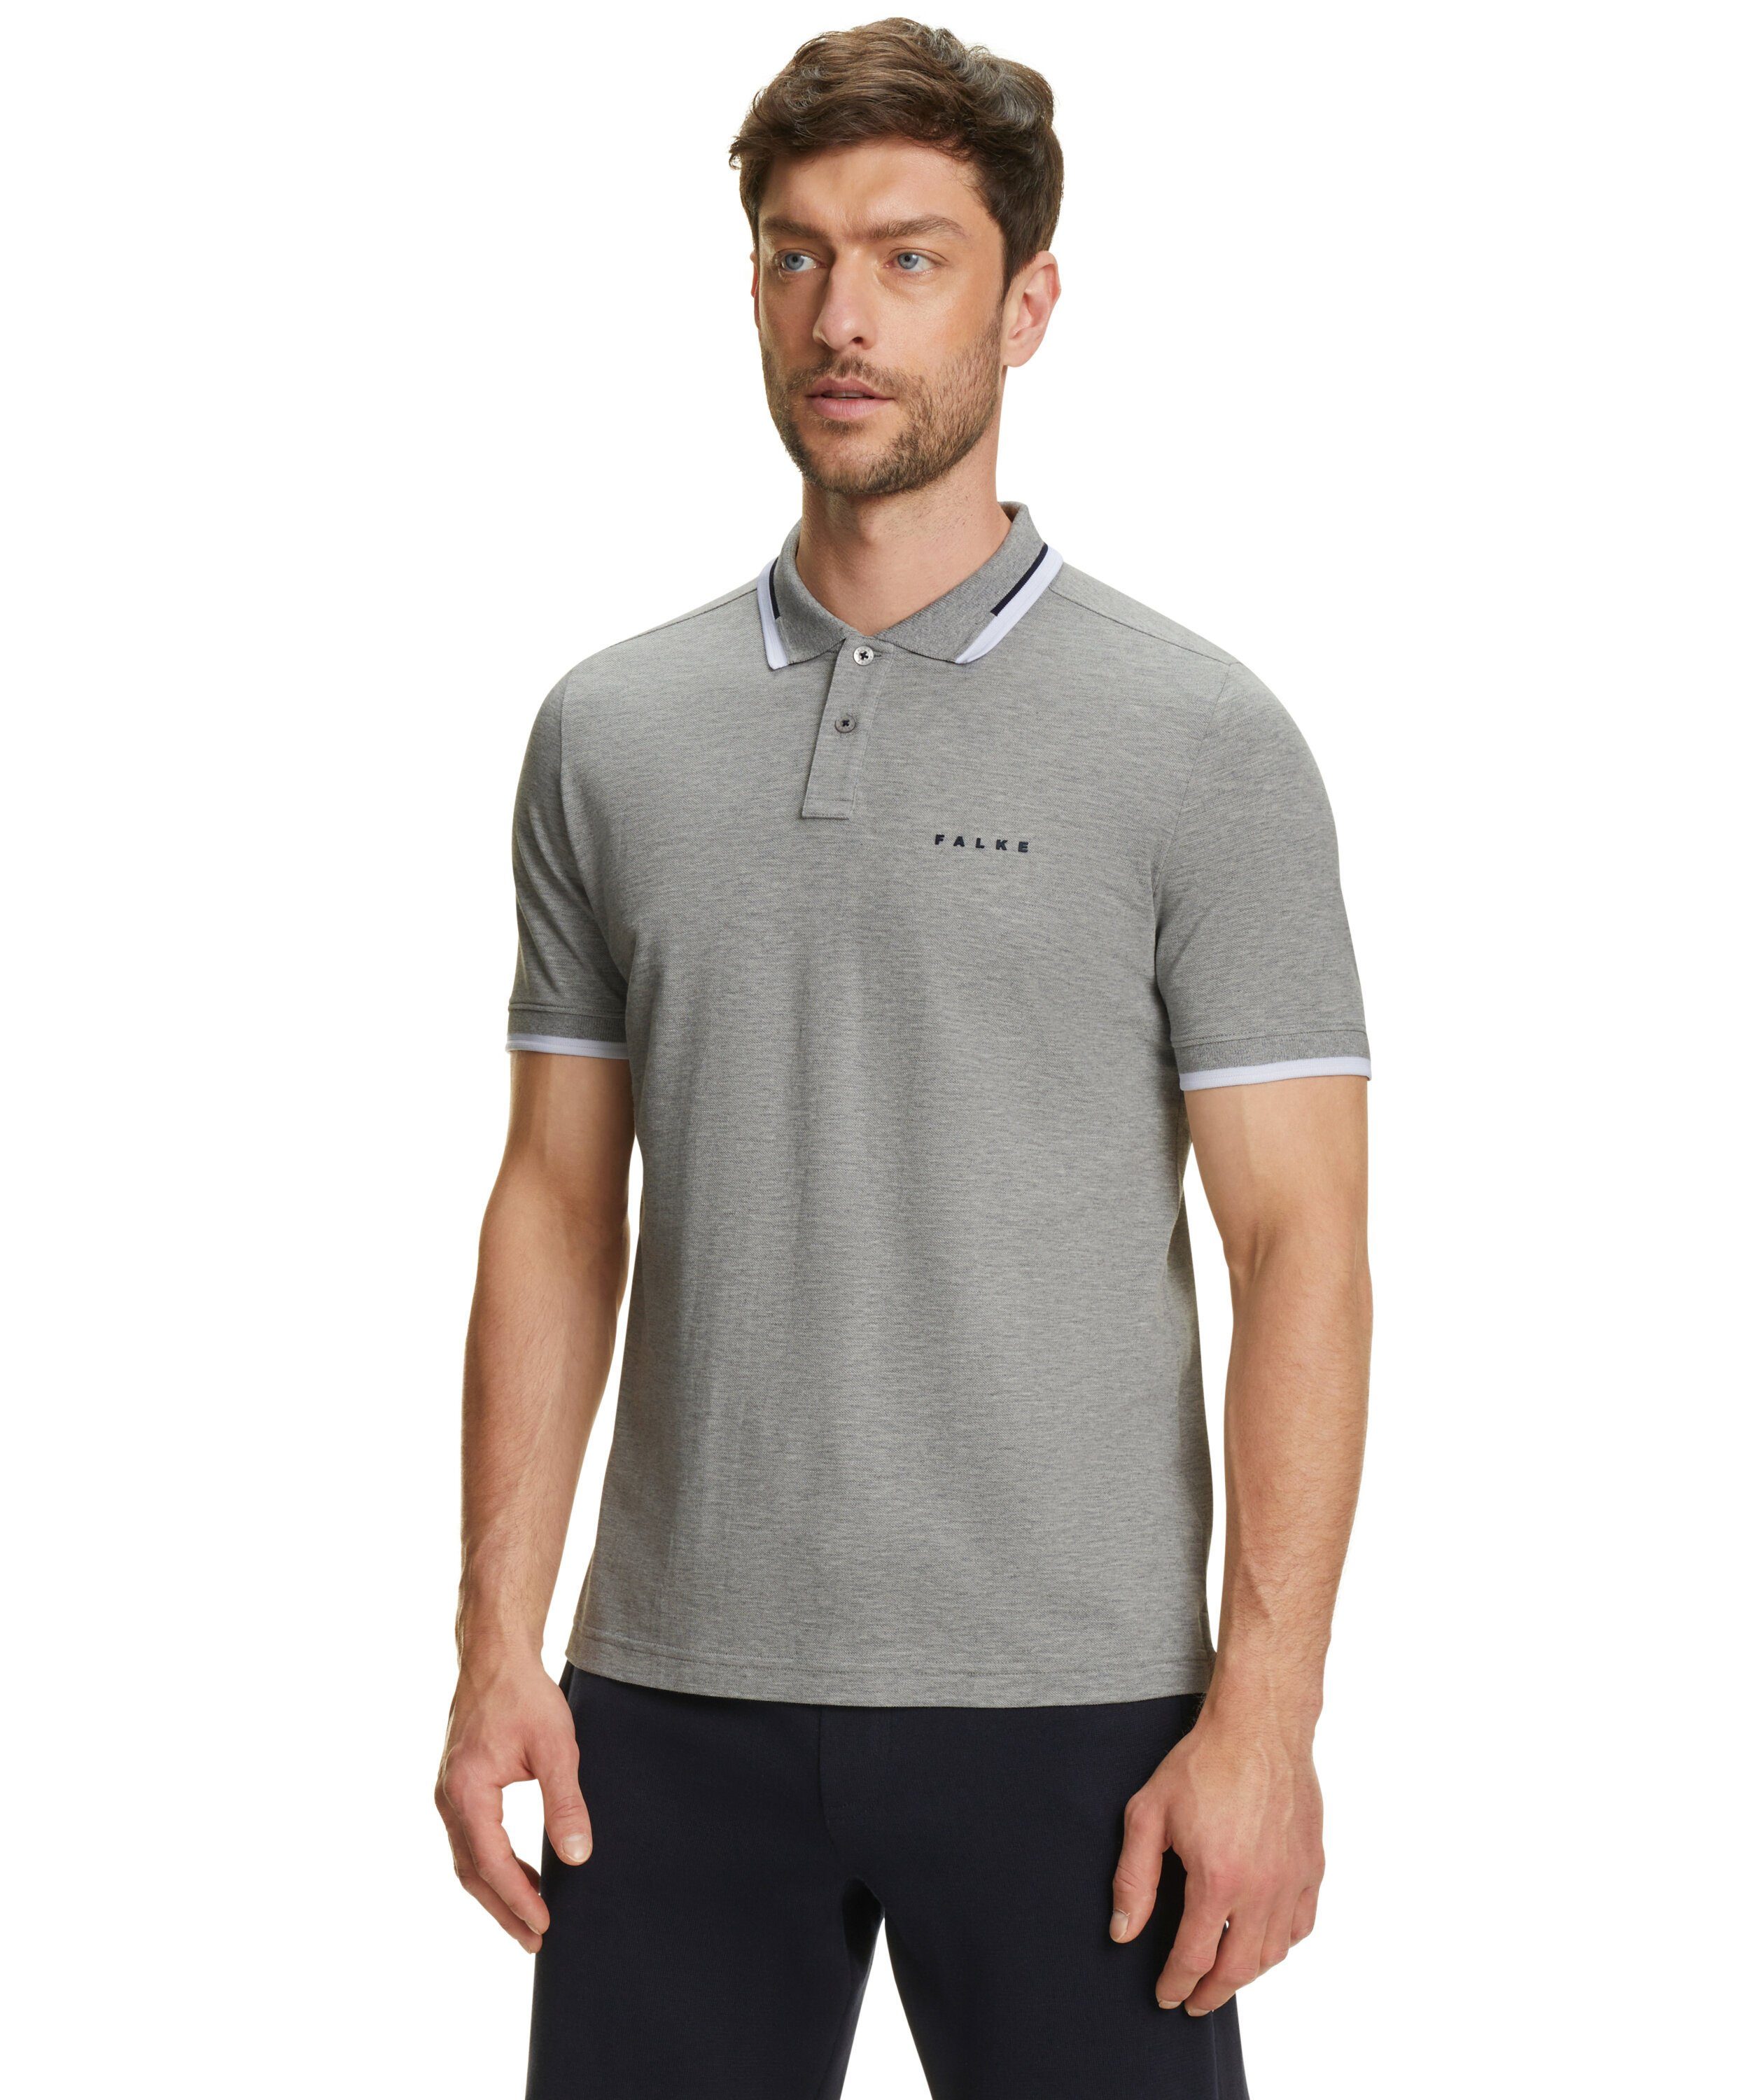 FALKE Poloshirt aus hochwertiger Pima-Baumwolle light grey (3400)